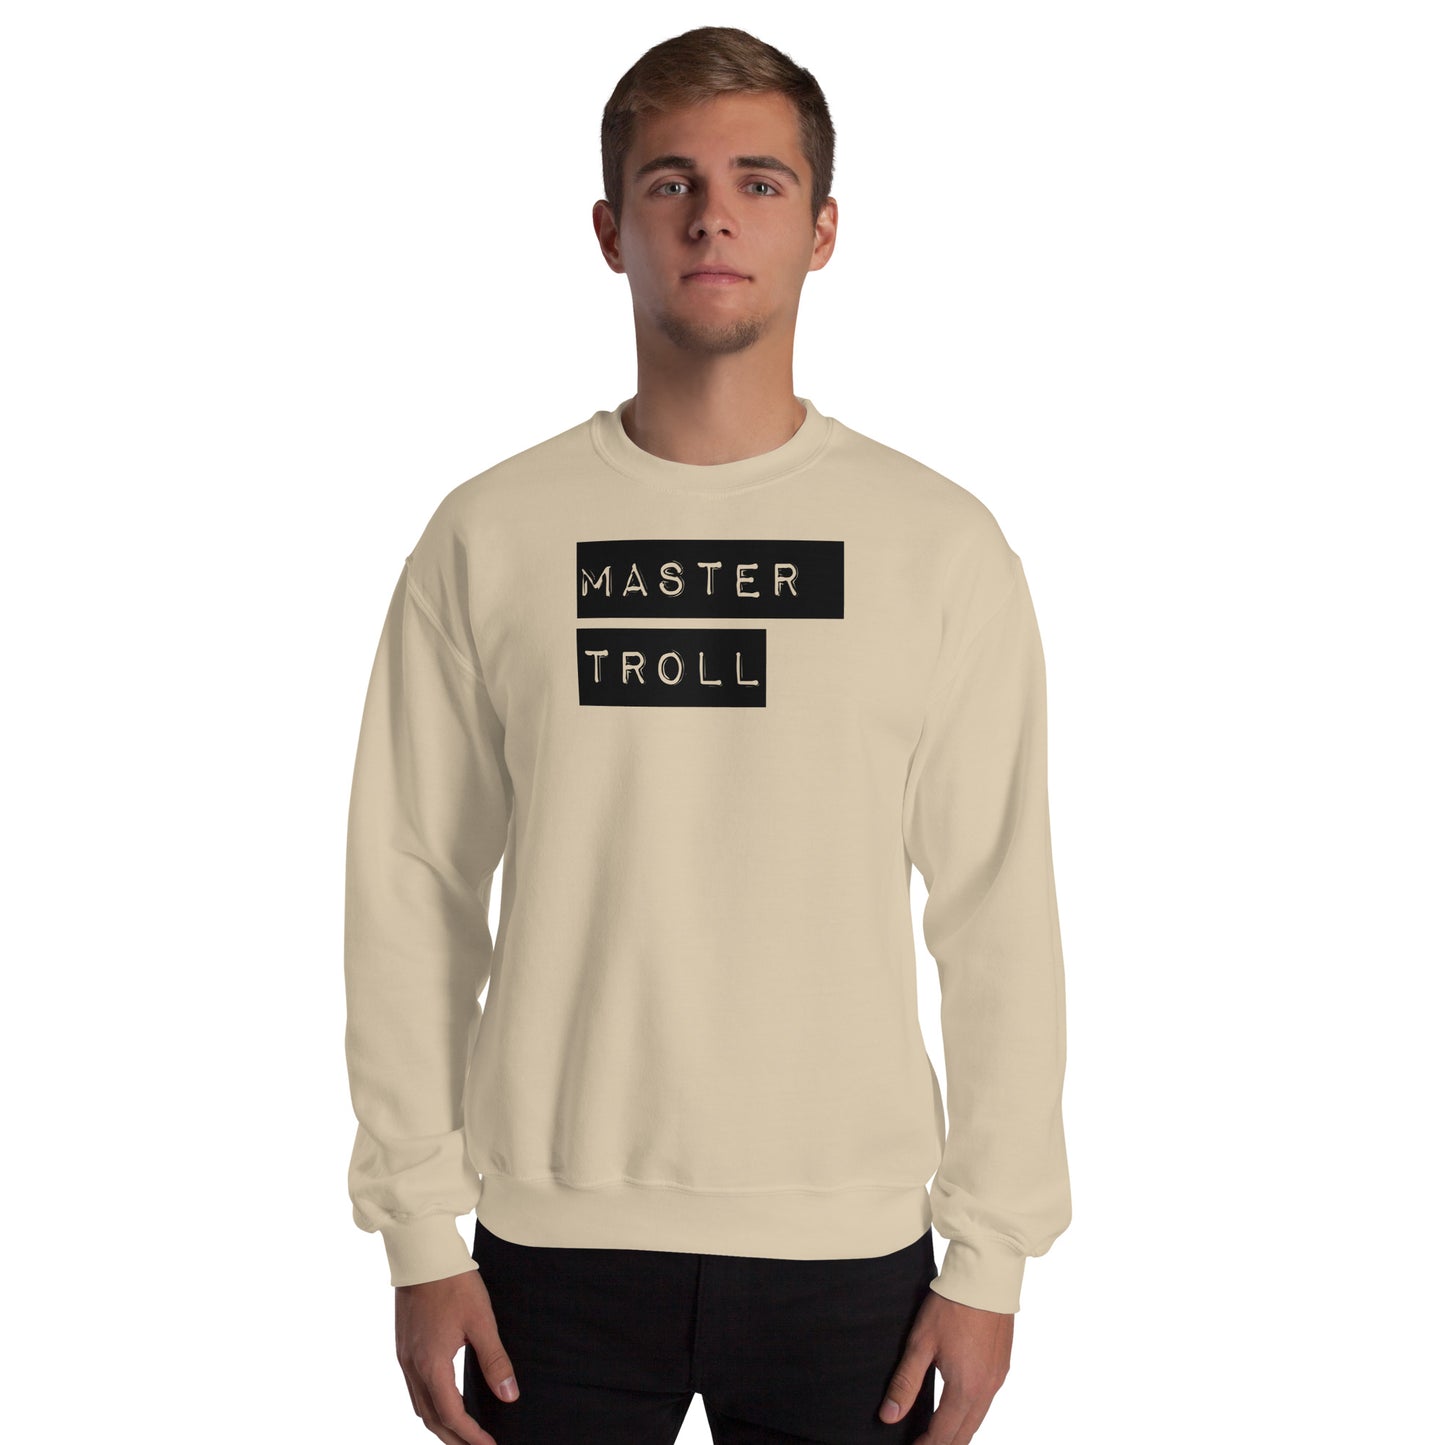 MASTER TROLL Unisex Sweatshirt